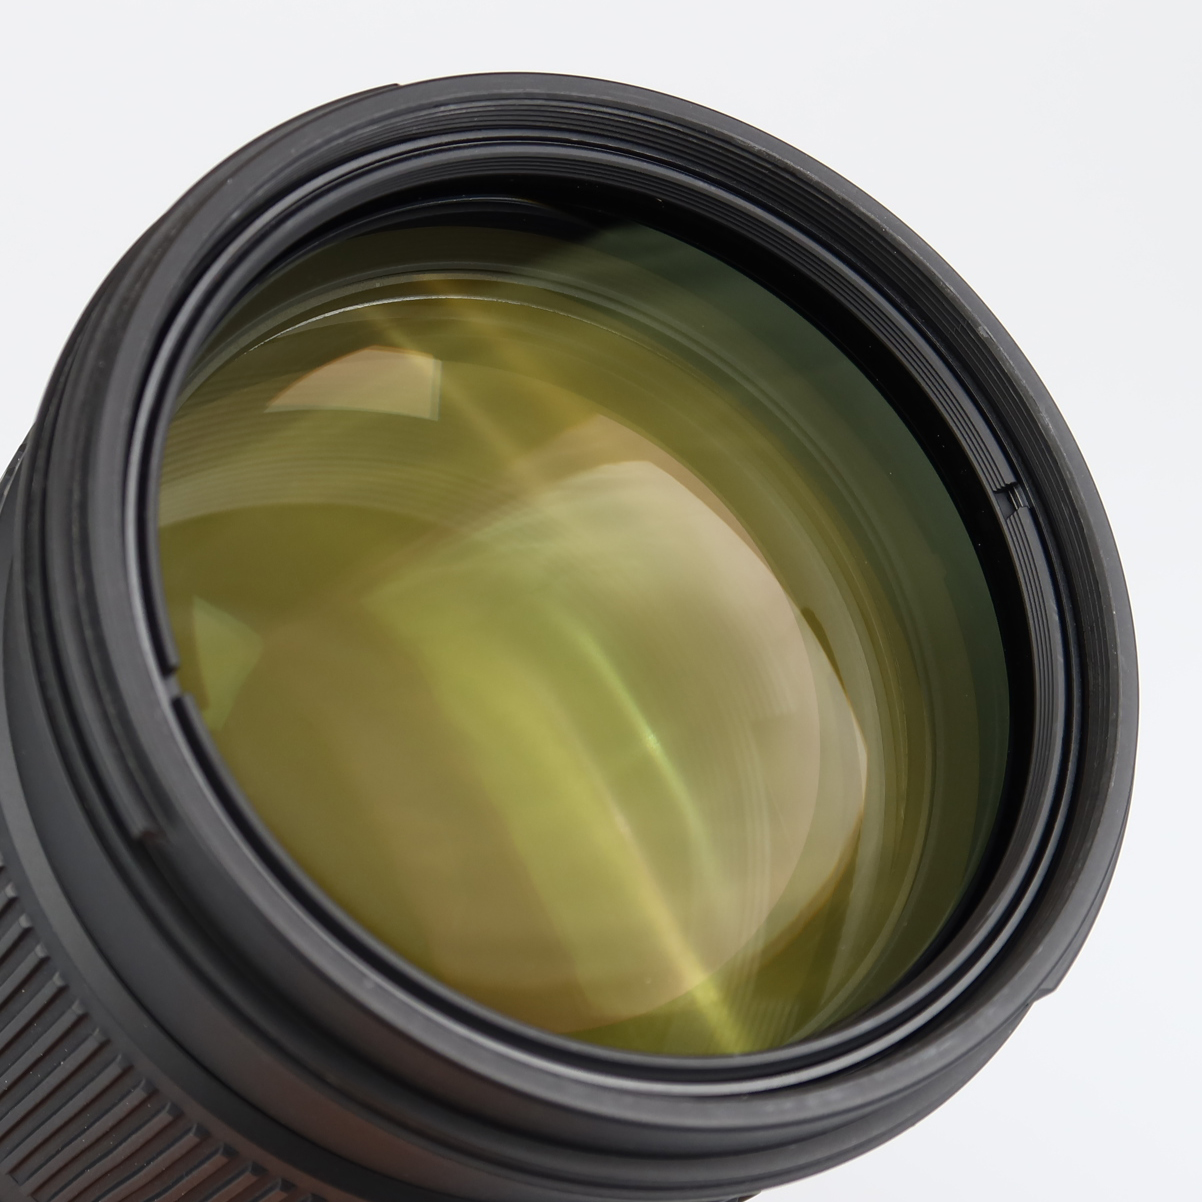 Sigma 70-200mm f/2.8 APO EX DG OS HSM (Canon) (Käytetty)